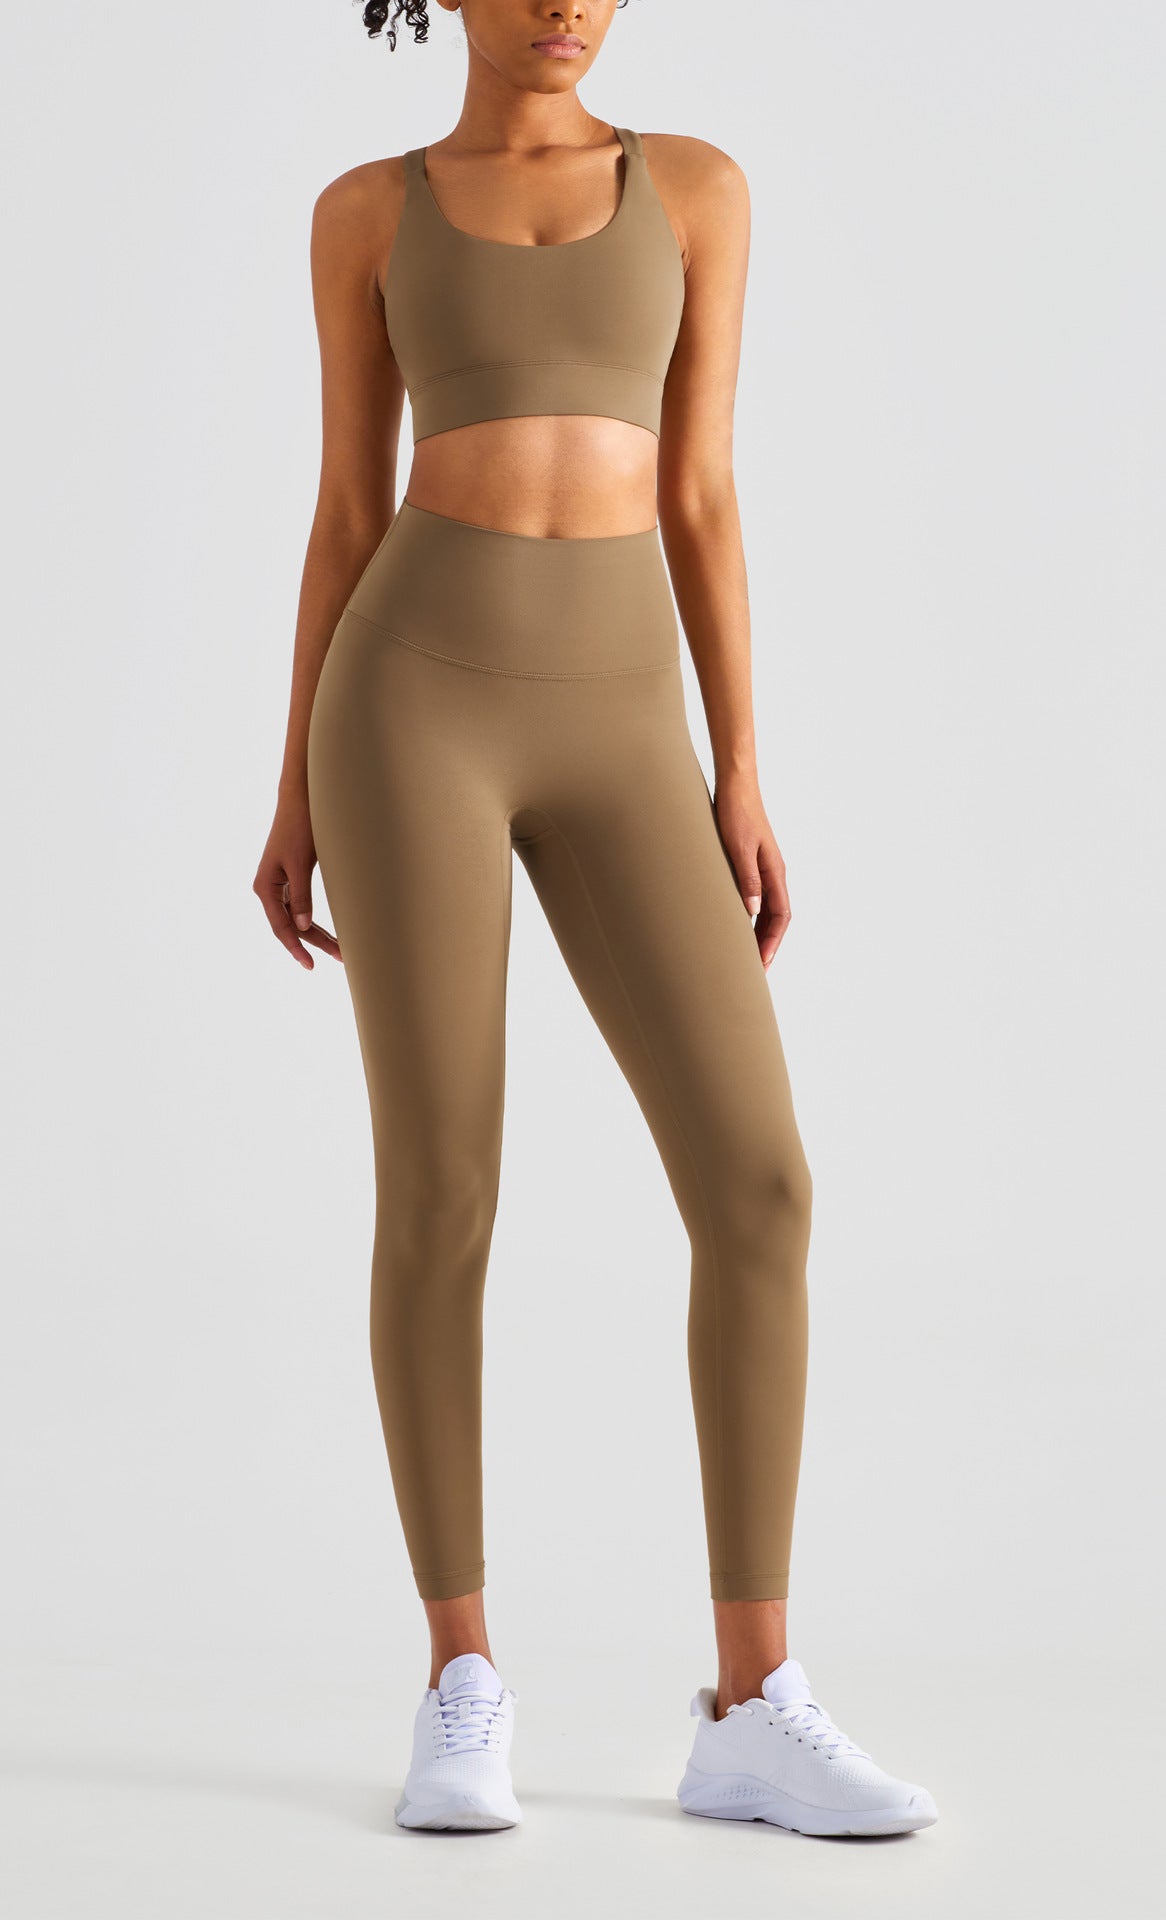 2023.08 46 colors Link1 2023 leggings fitness pants female tight high waist yoga pants